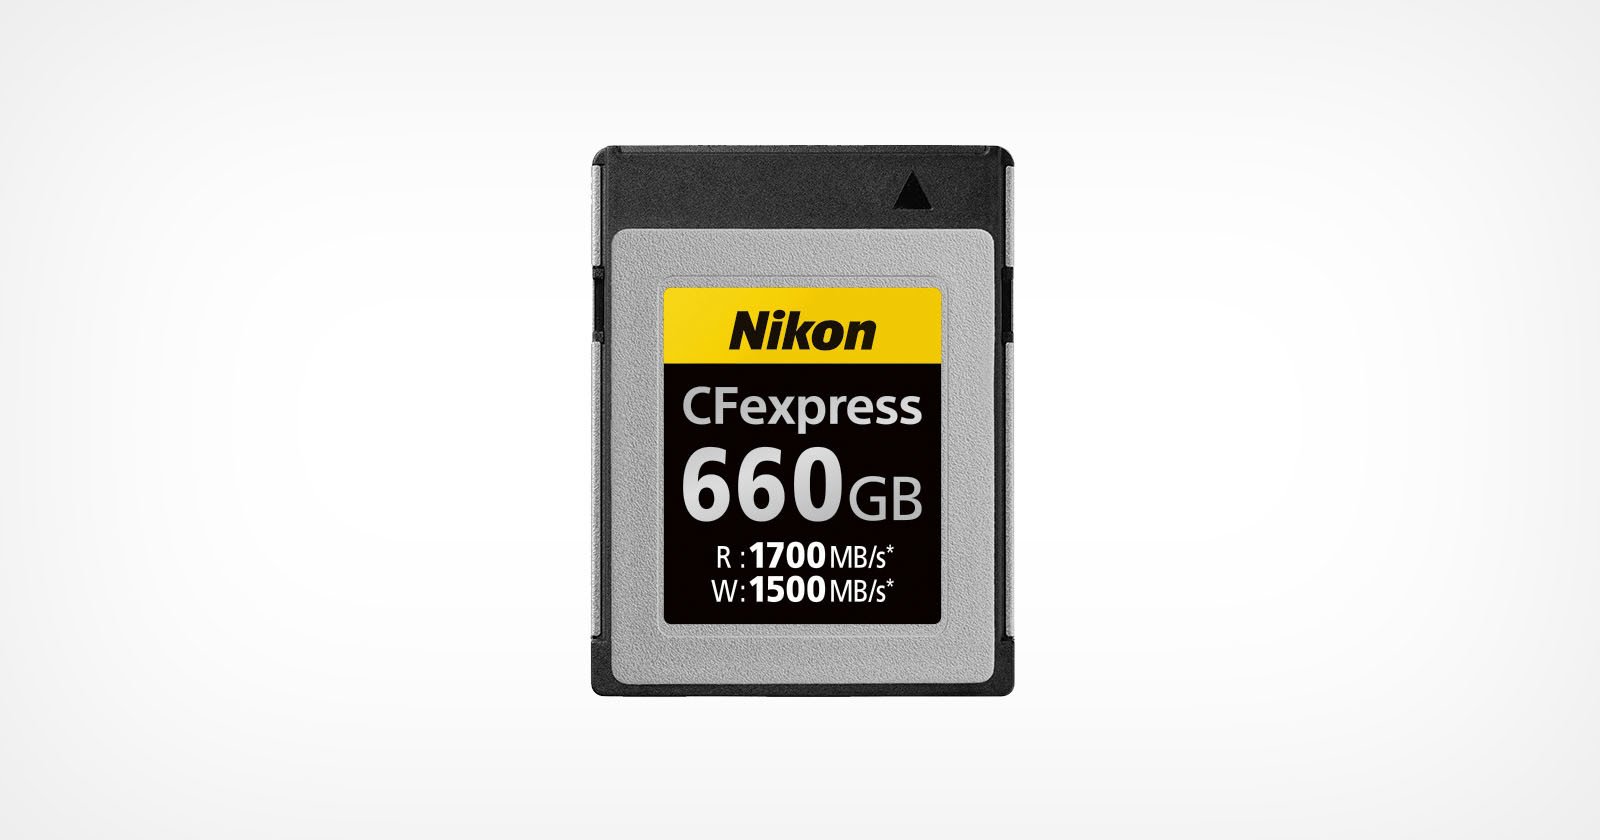  nikon 660gb cfexpress memory card costs 727 